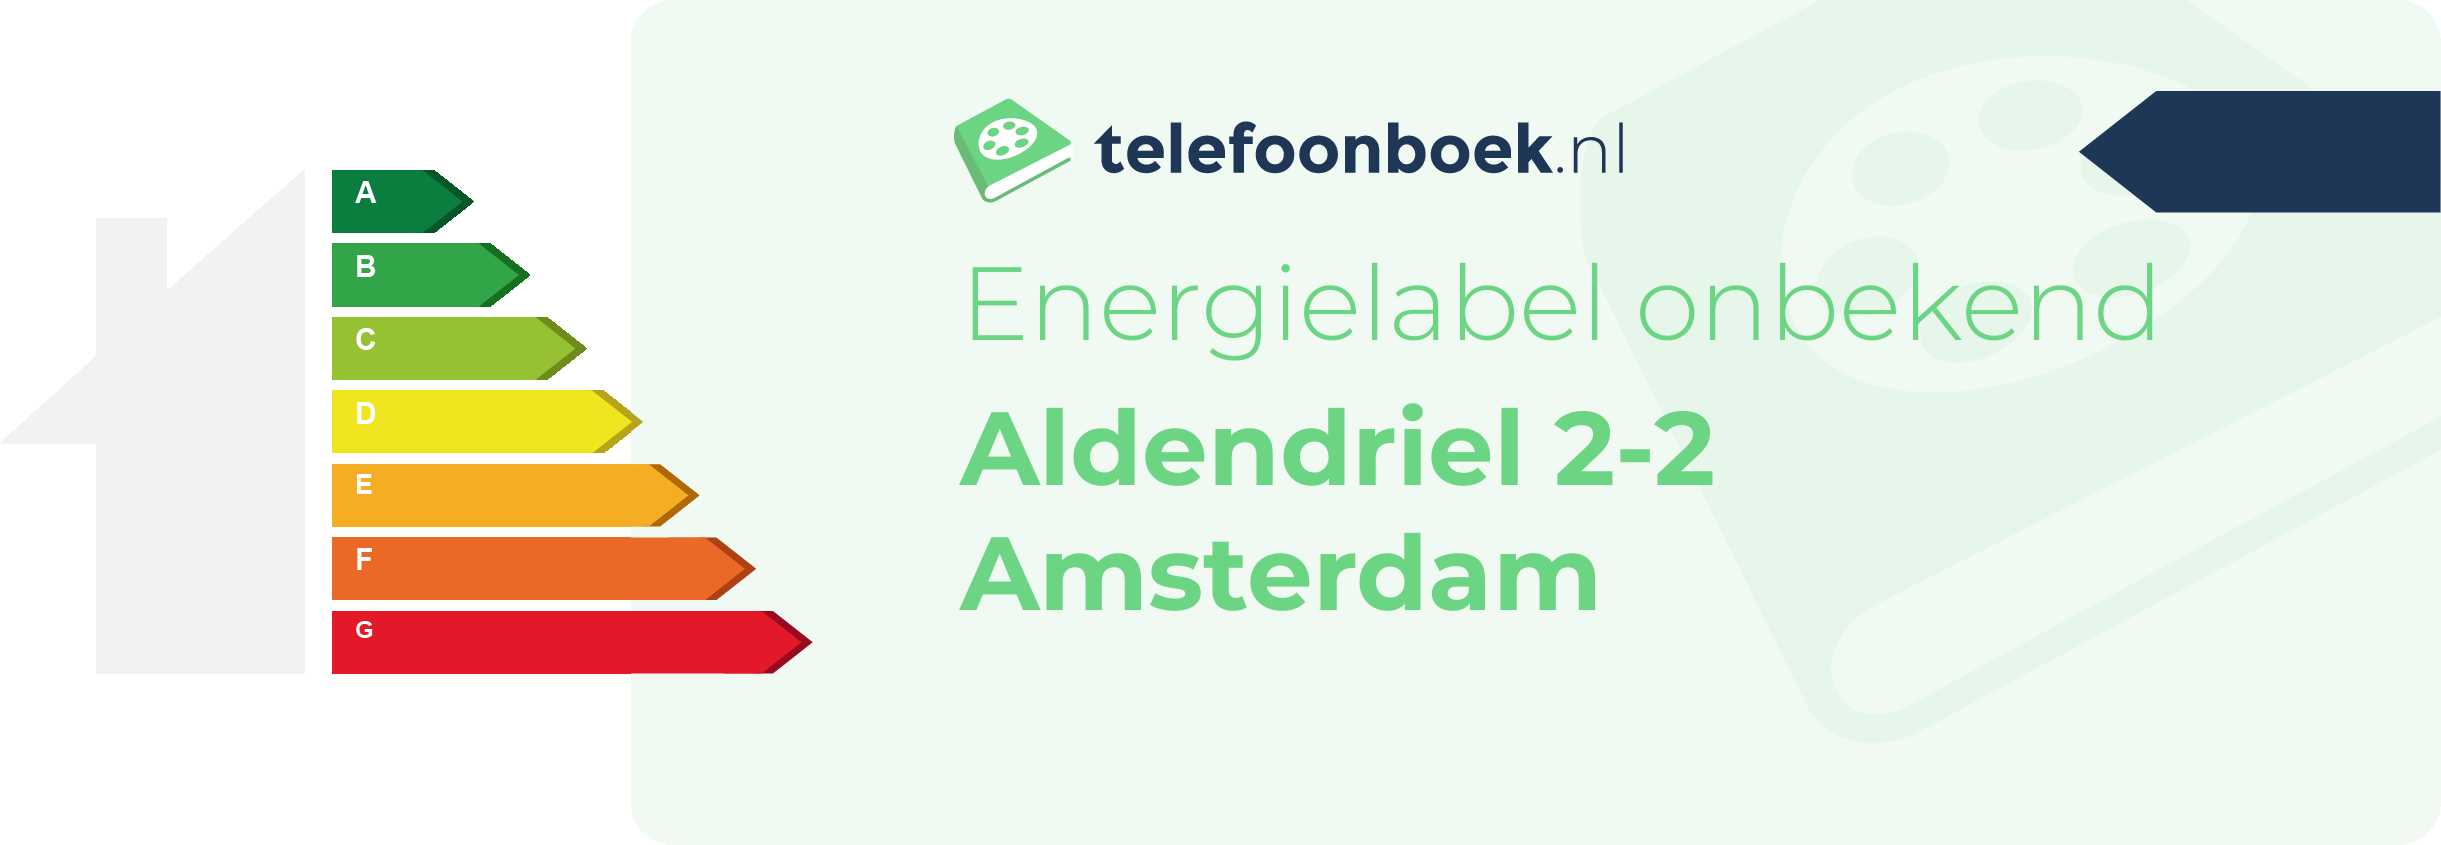 Energielabel Aldendriel 2-2 Amsterdam